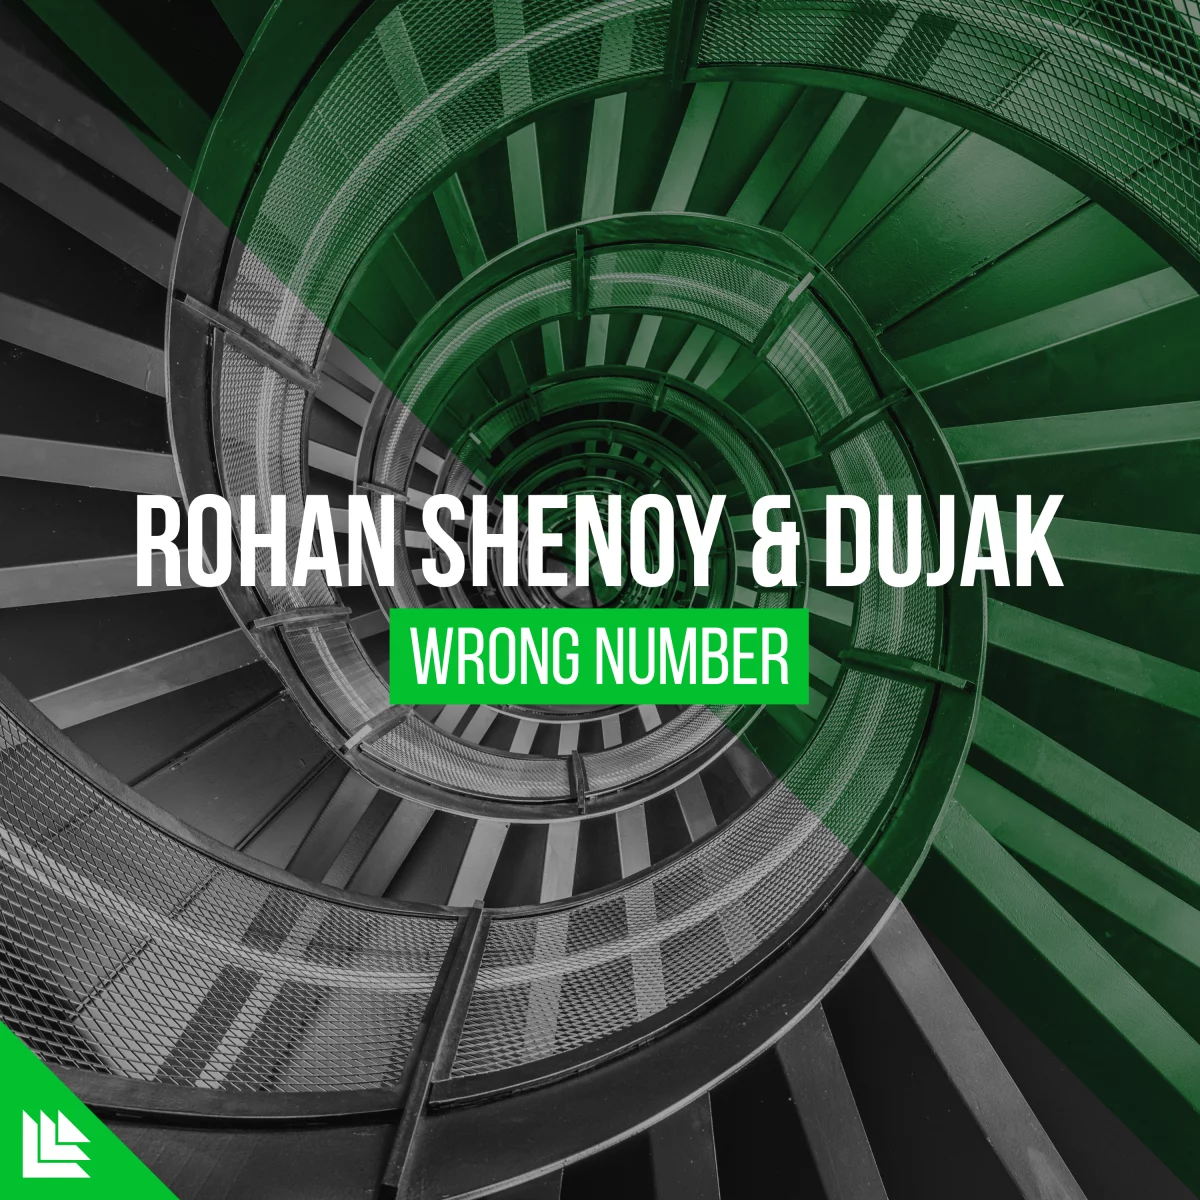 Wrong Number - Rohan Shenoy⁠ & Dujak⁠